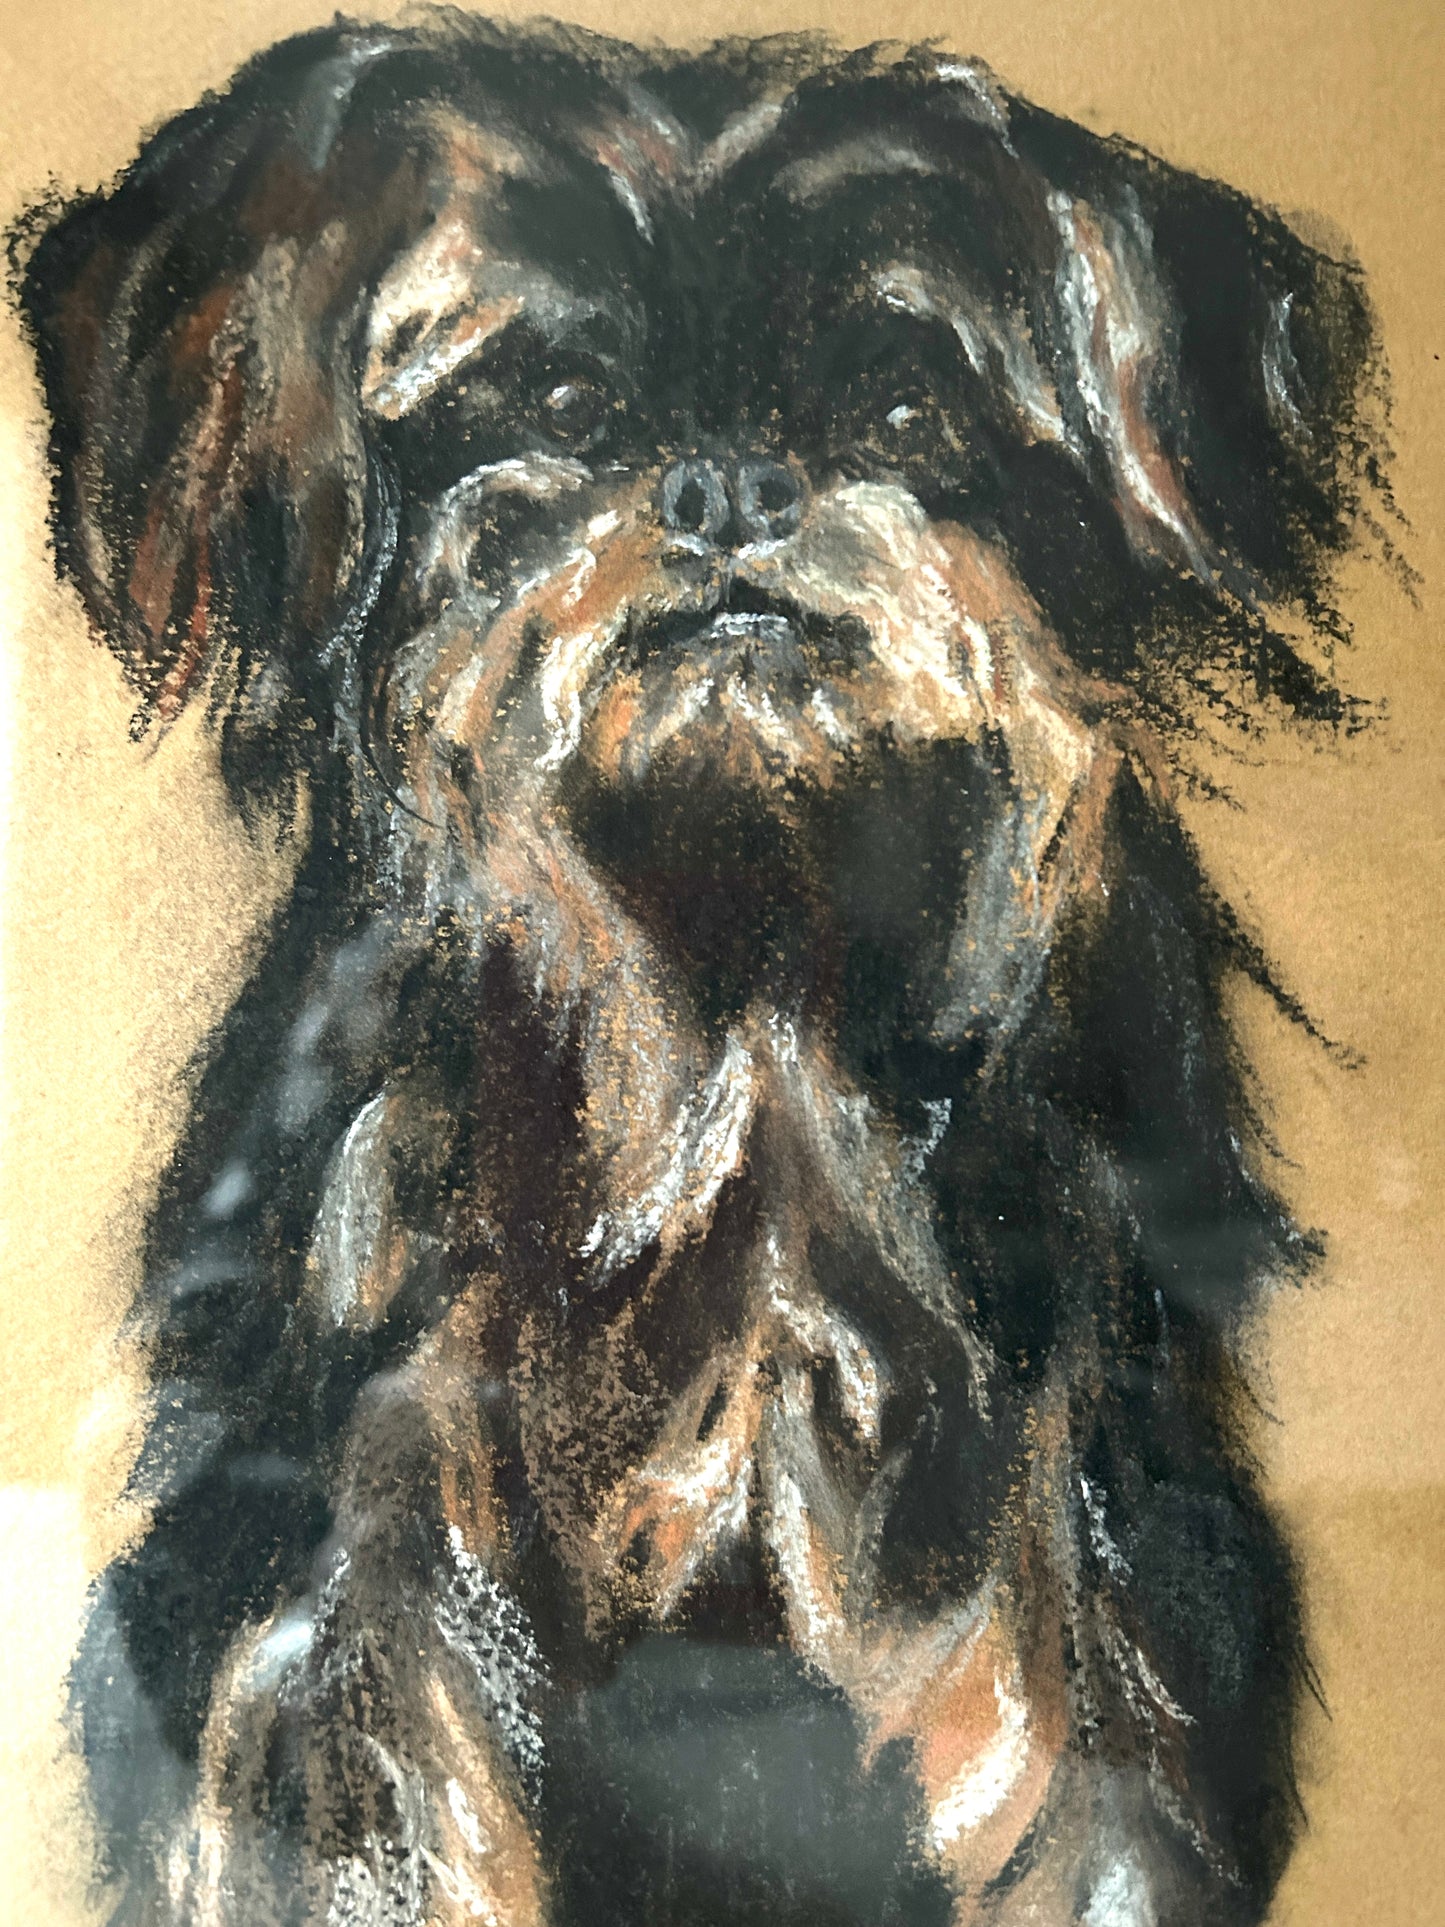 Mid century Portrait of a Yorkshire Terrier